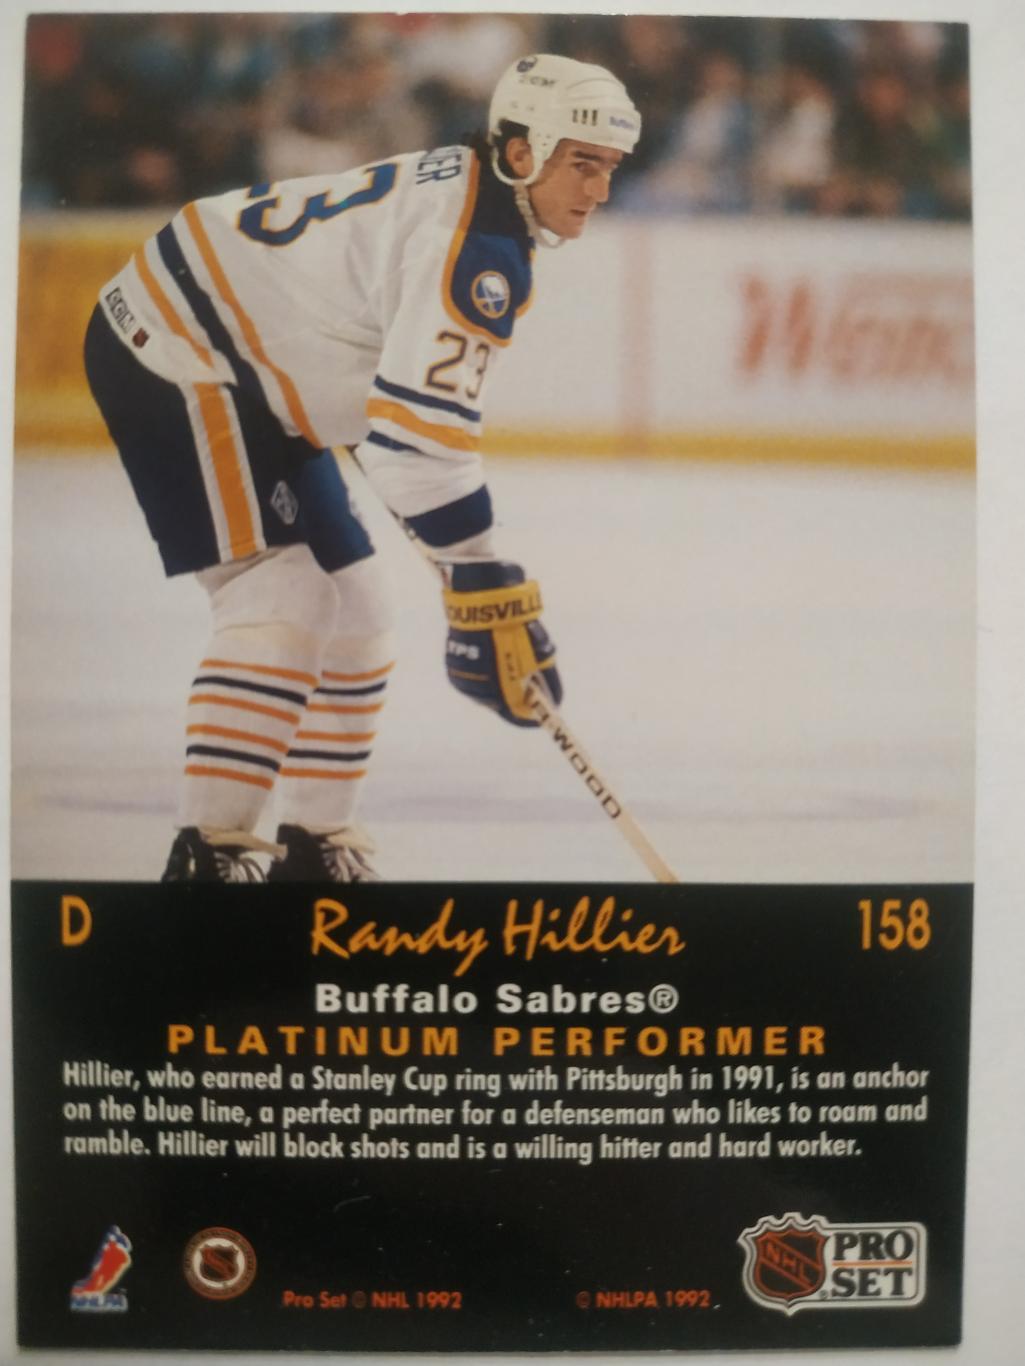 ХОККЕЙ КАРТОЧКА НХЛ PRO SET PLATINUM 1992 NHL RANDY HILLIER SABRES #158 1